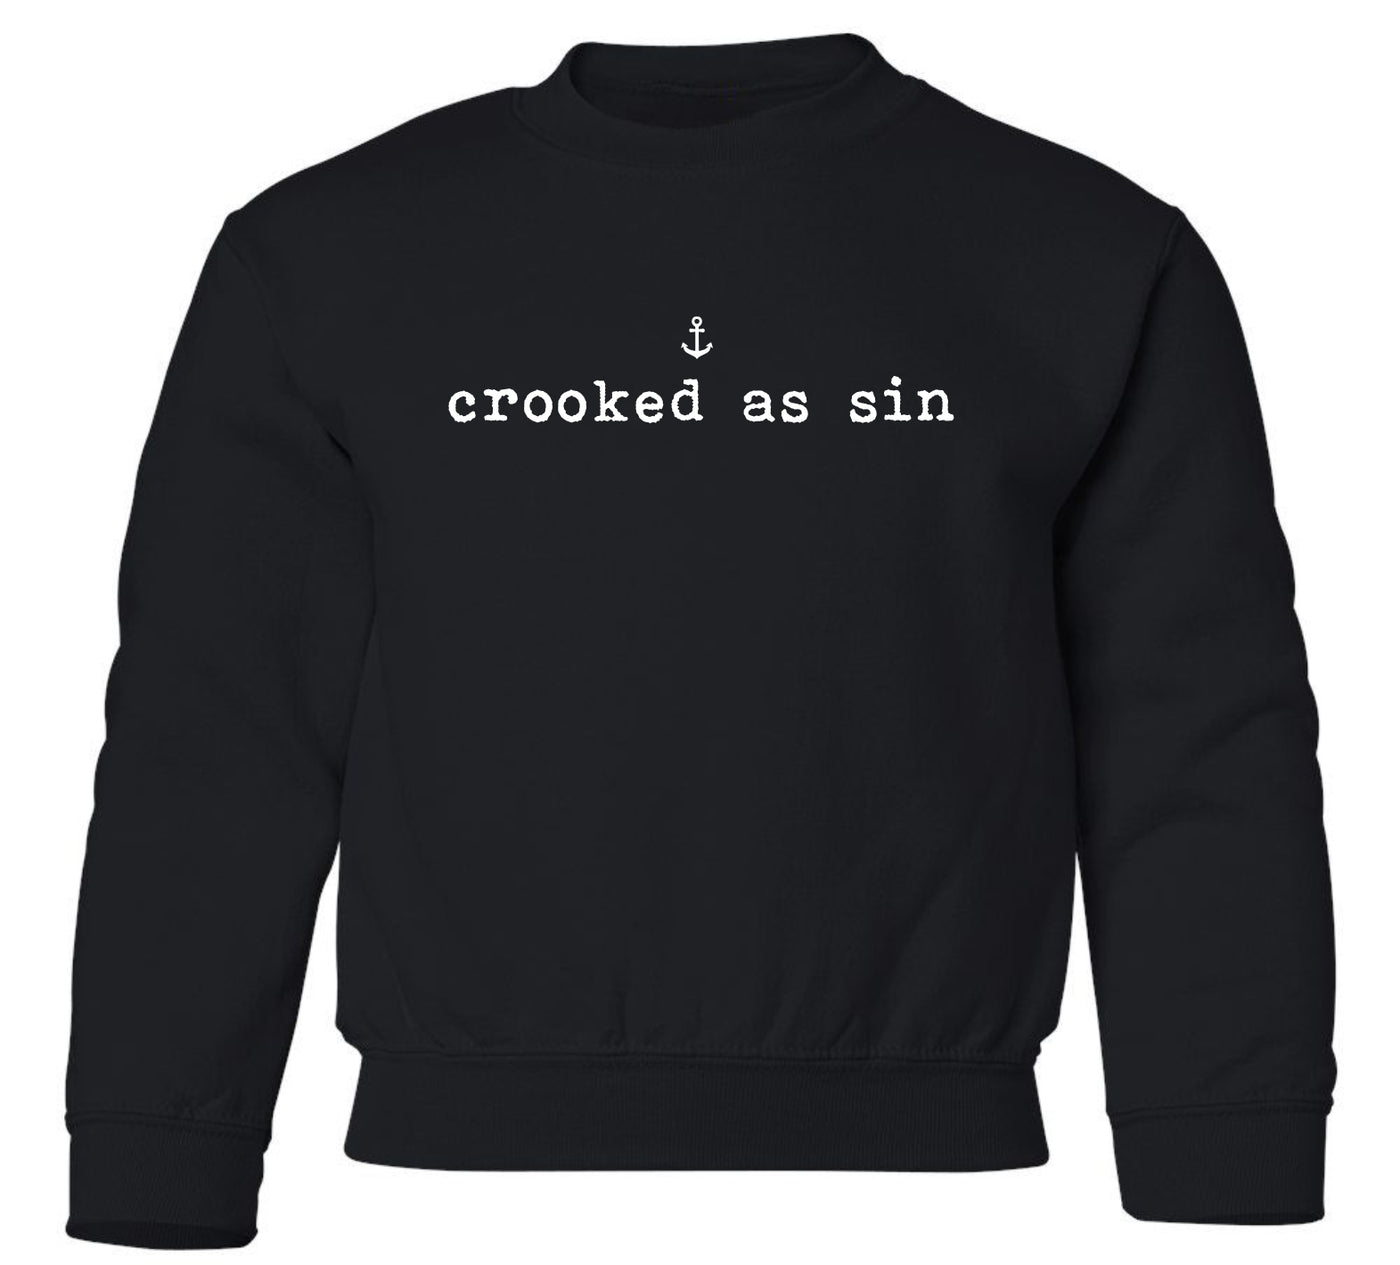 "Crooked As Sin" Toddler/Youth Crewneck Sweatshirt